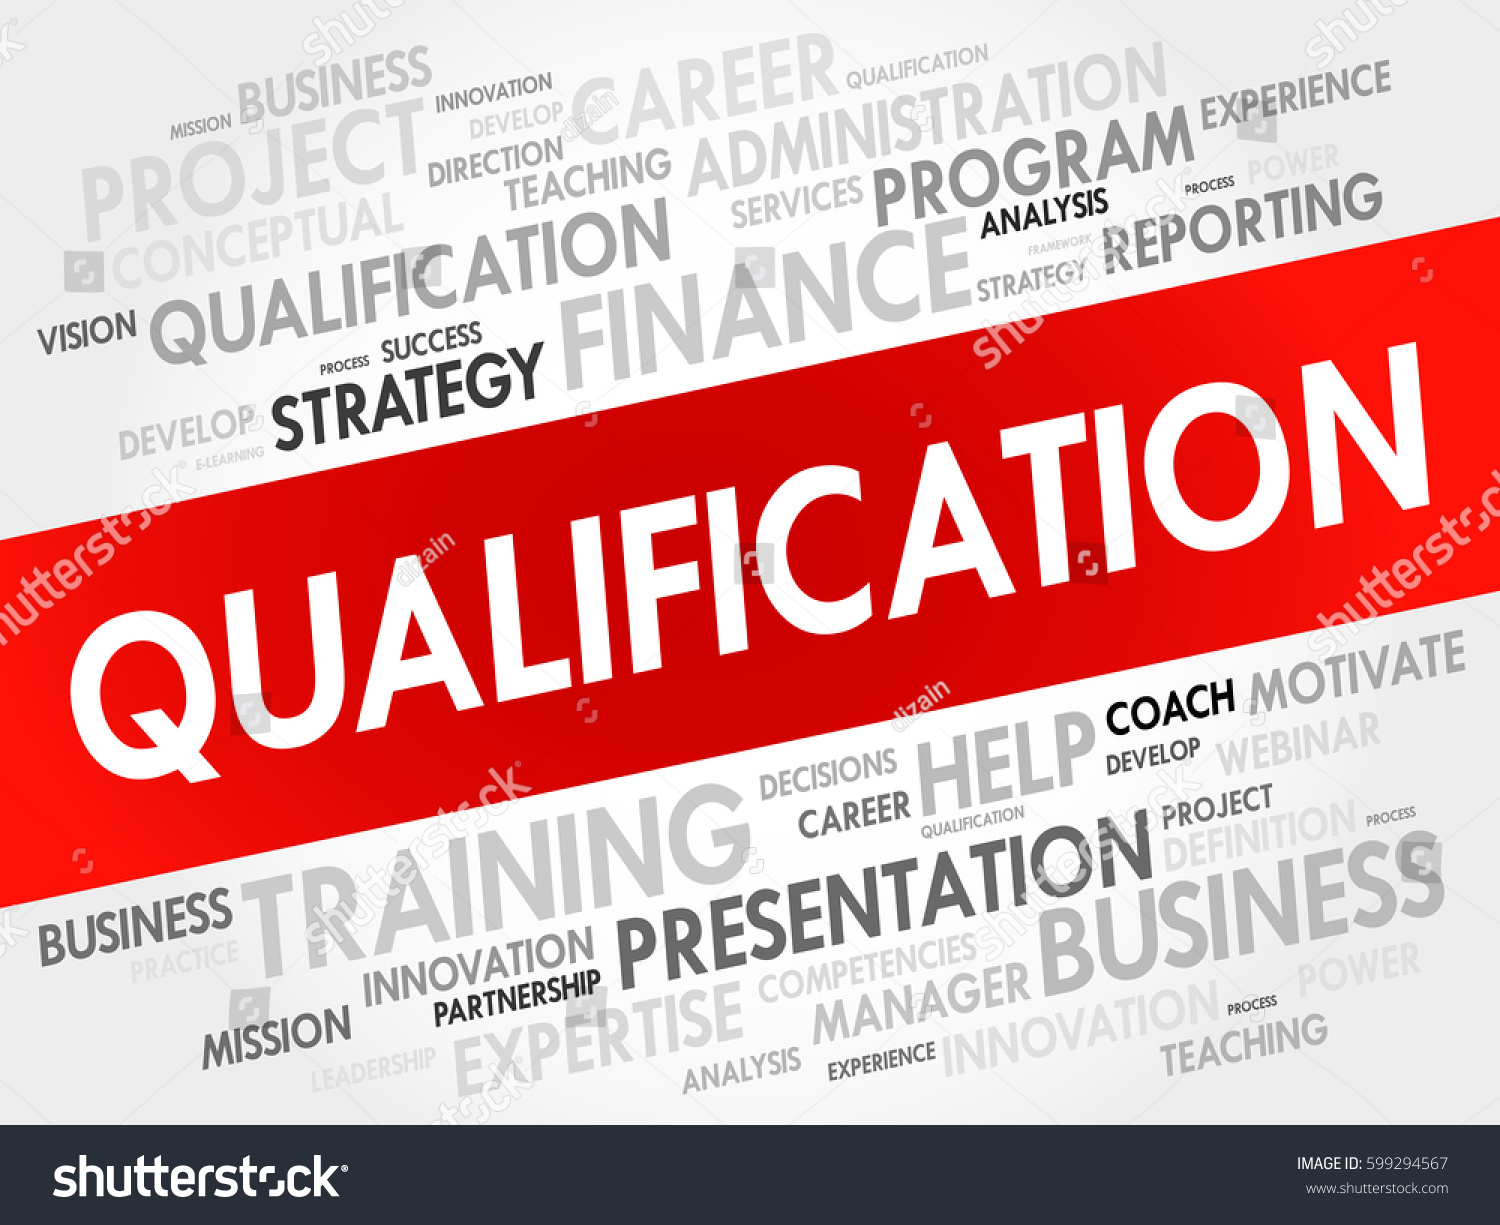 Qualification Lead Qualification: